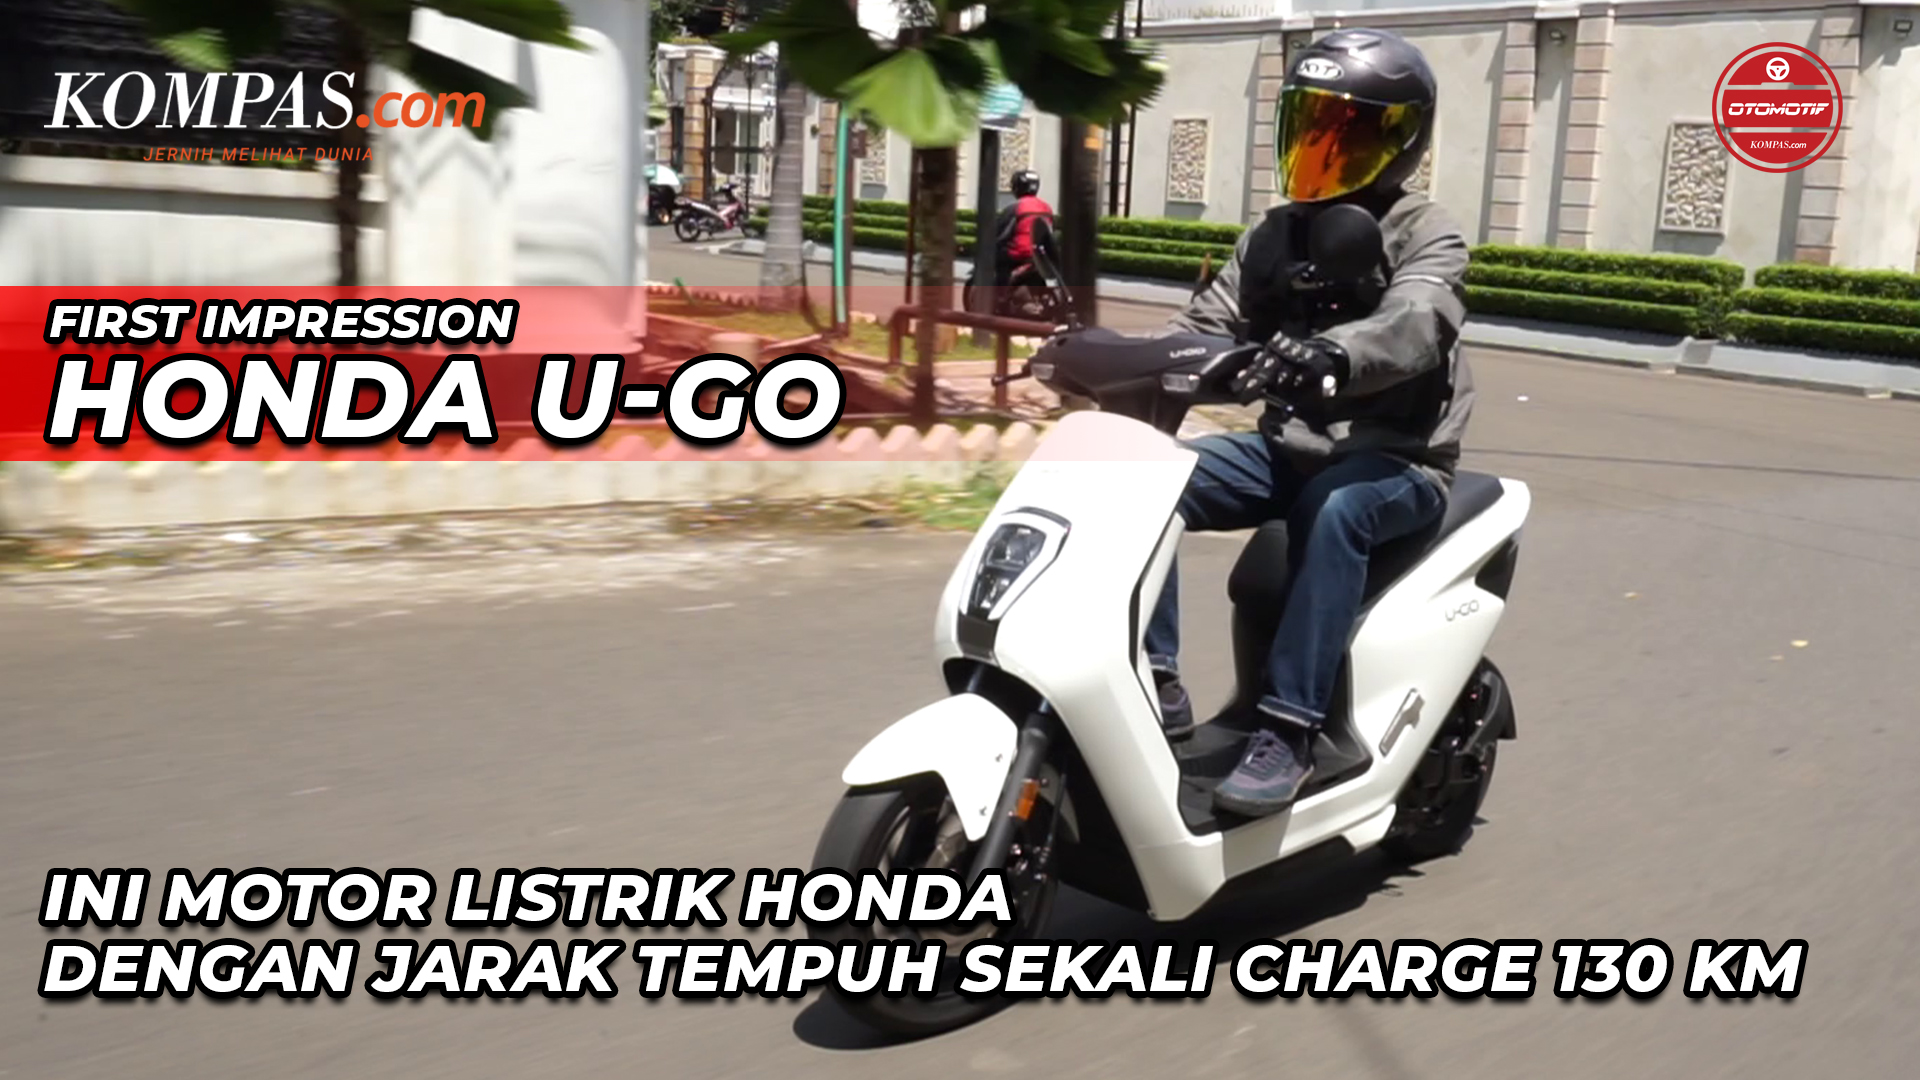 Honda U-GO | Motor Listrik Honda Dengan Jarak Tempuh 130km